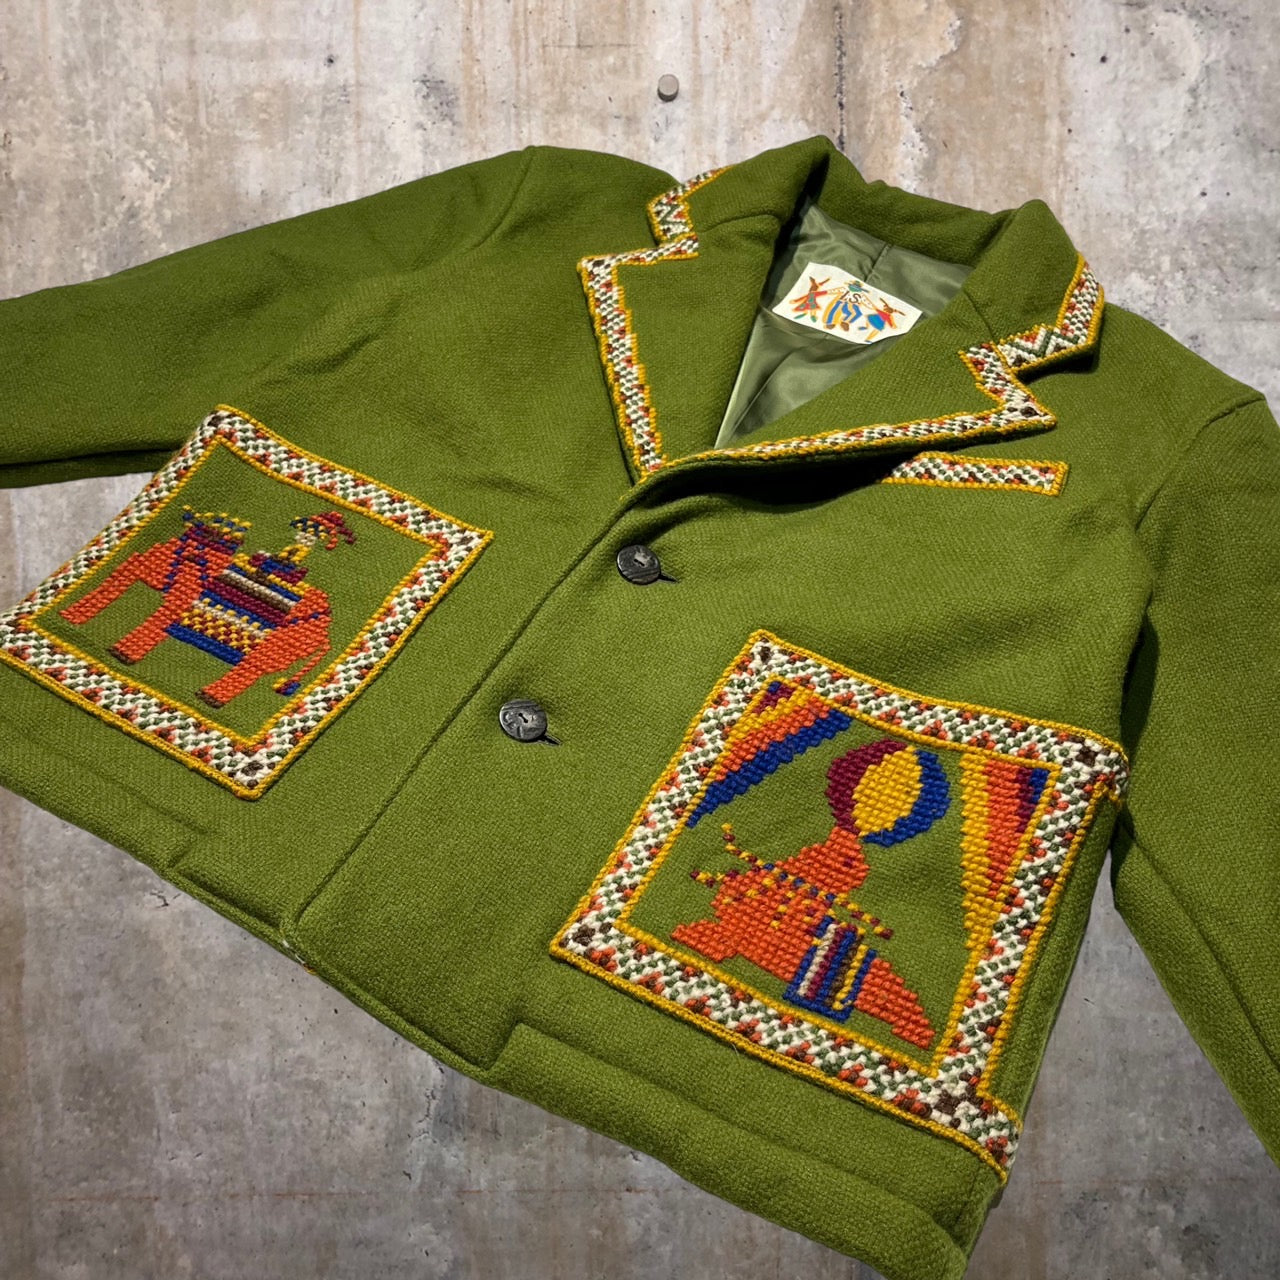 i.s. ISSEY MIYAKE(アイエス イッセイミヤケ) 80's Mexican stitch woolj acket/メキシカンステッチウールジャケット RG34010 M（メンズサイズ） グリーン